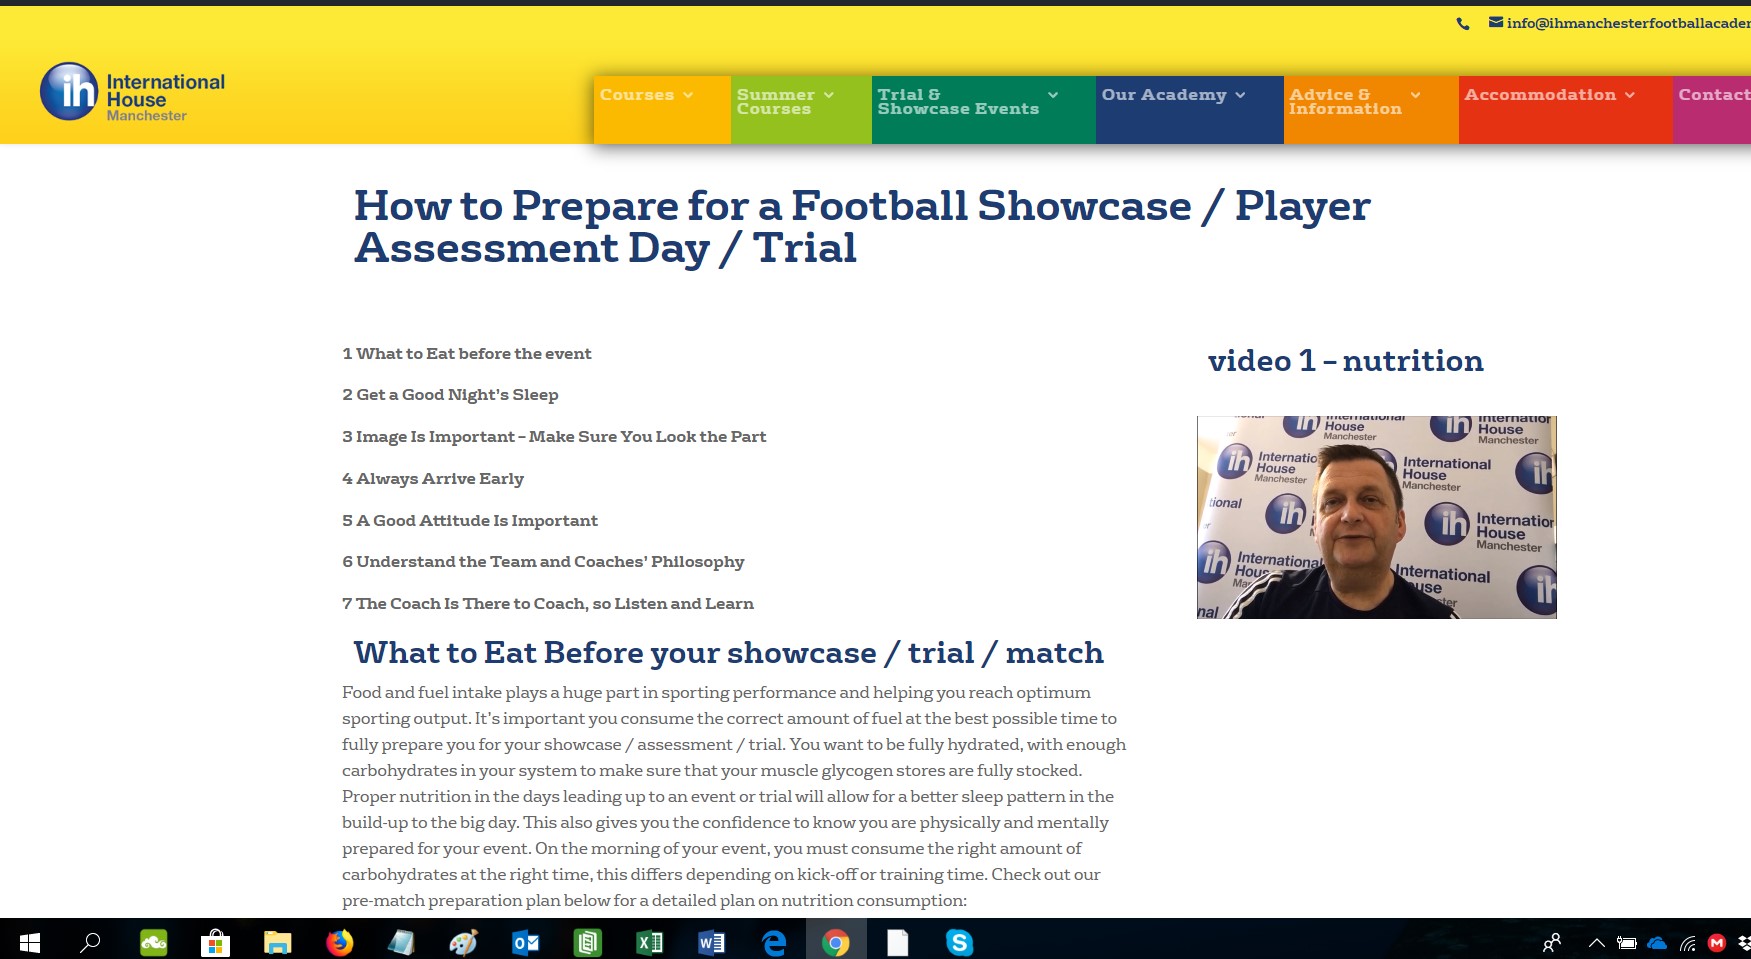 Preparing for a showcase event / football trial - part 1 nutrition